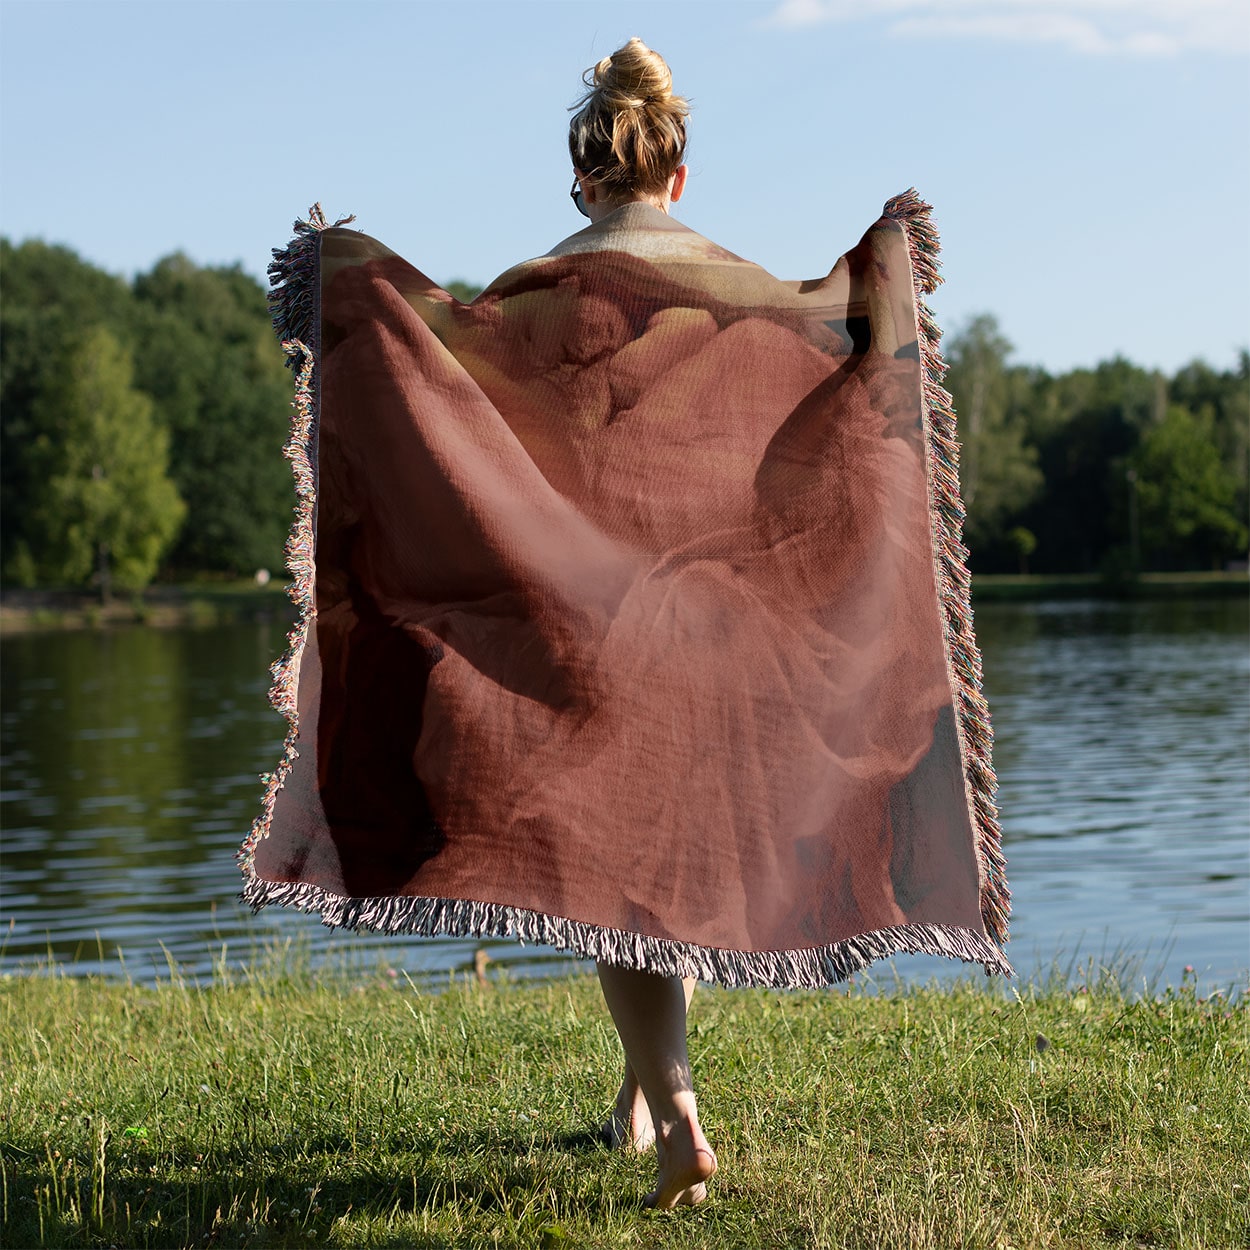 Victorian Era Woven Blanket Held on a Woman's Back Outside